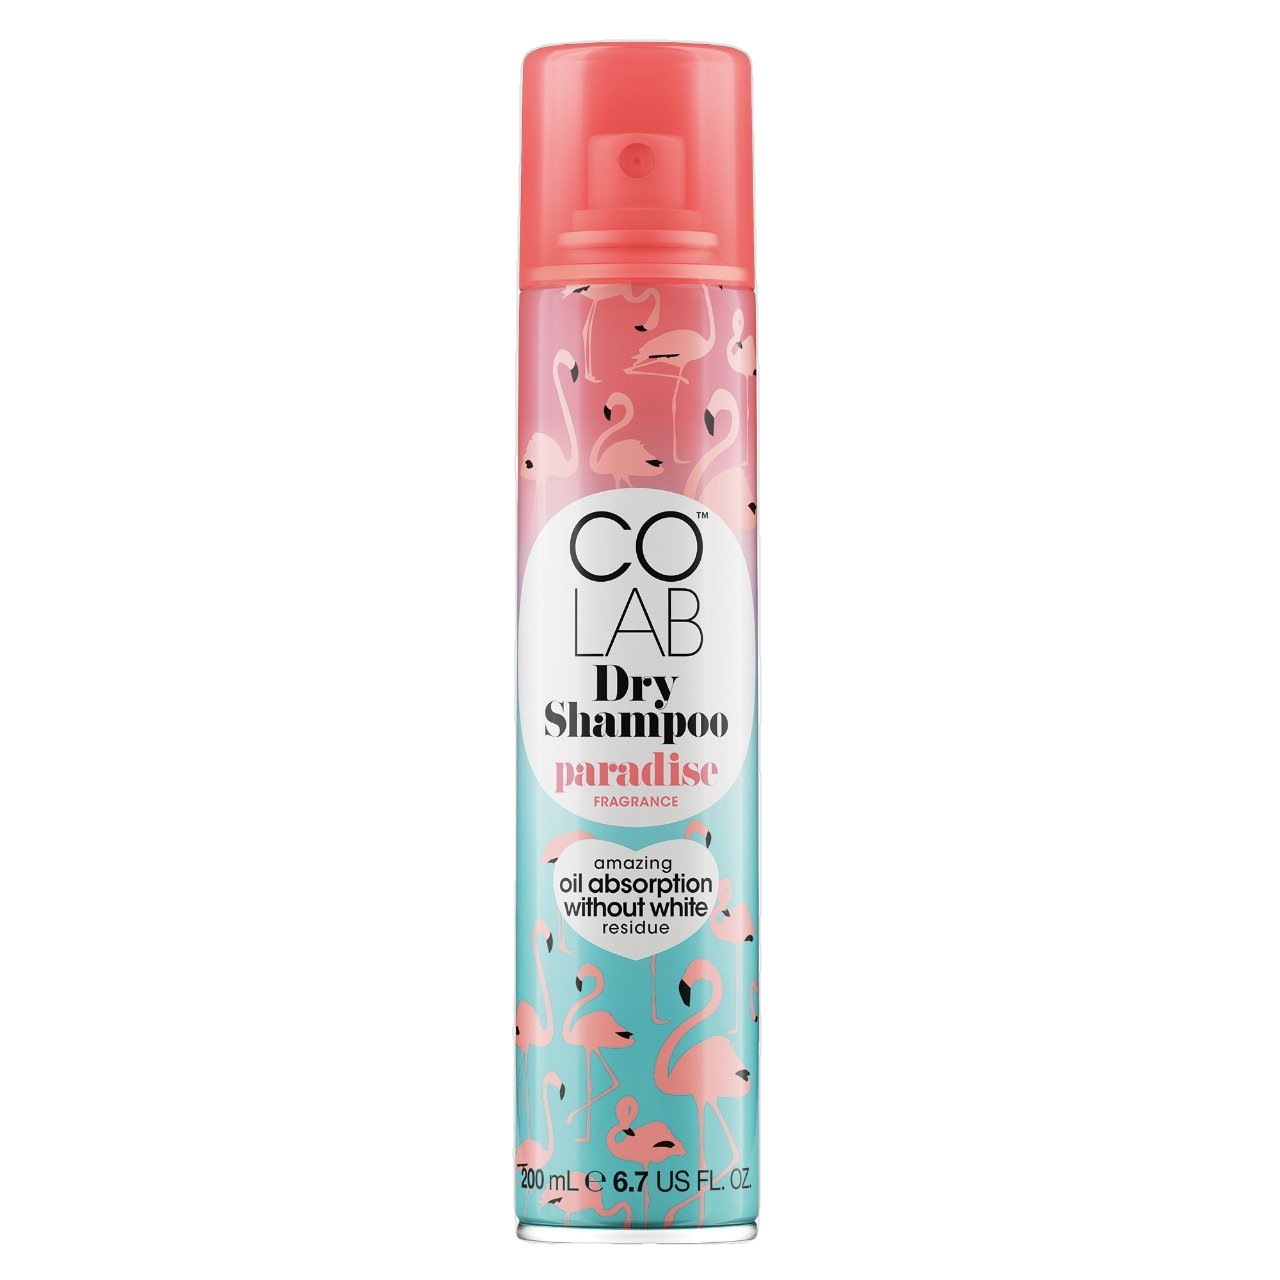 Colab Dry Shampoo Paradise Fragrance 200Ml - IZZAT DAOUK SA